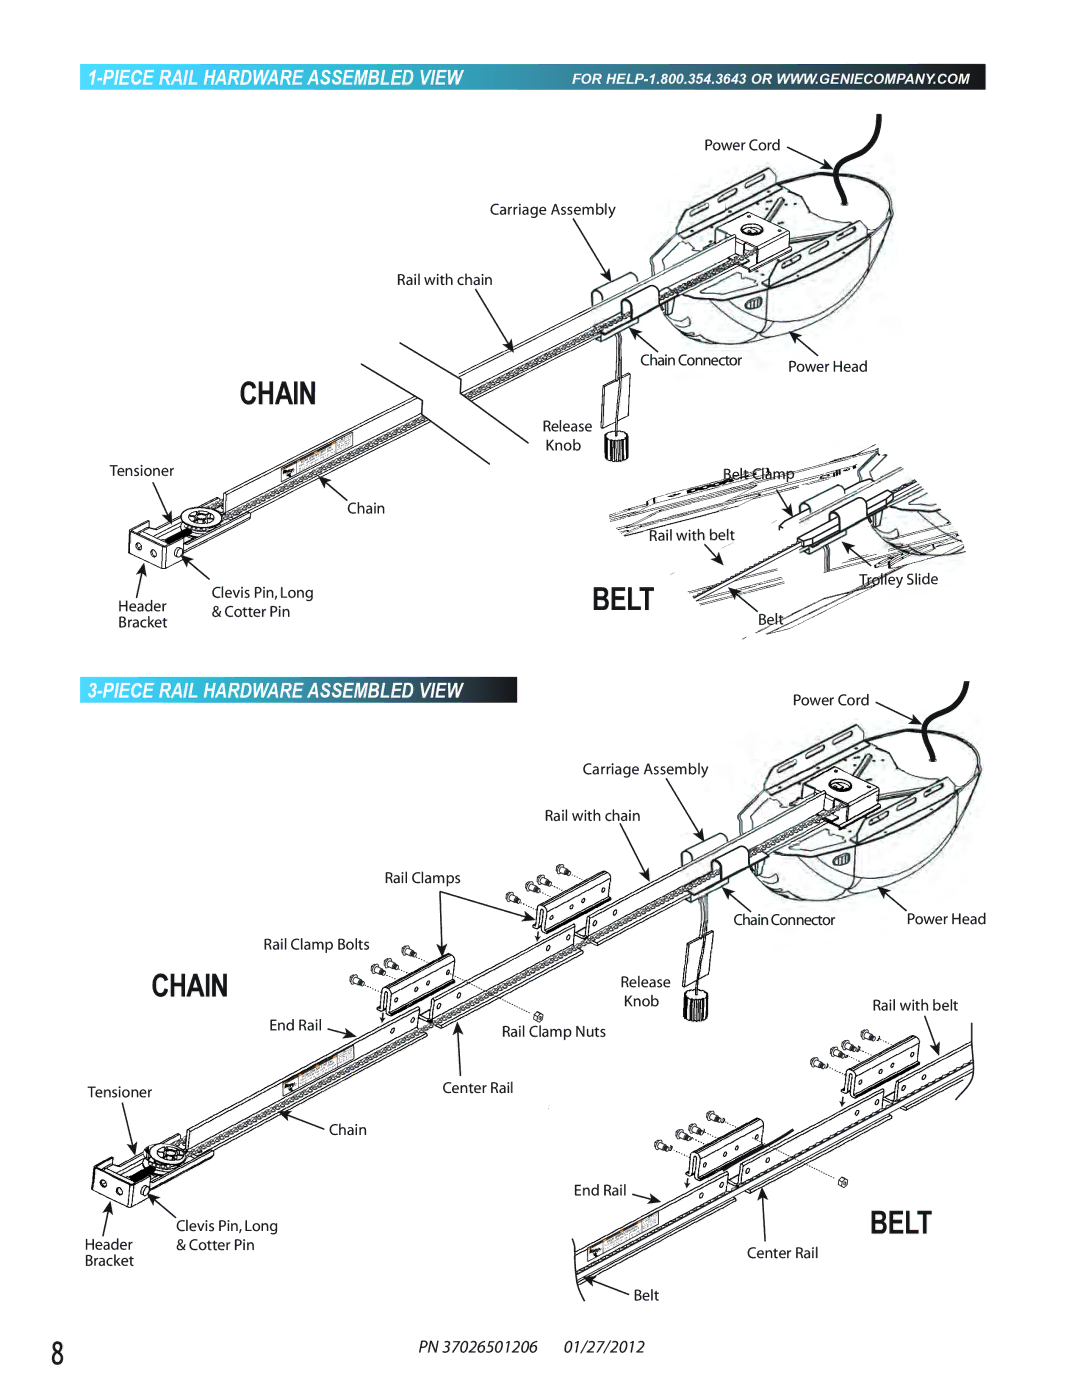 Genie 2024, 2042, 2022 manual Chain, Piece Rail Hardware Assembled View 